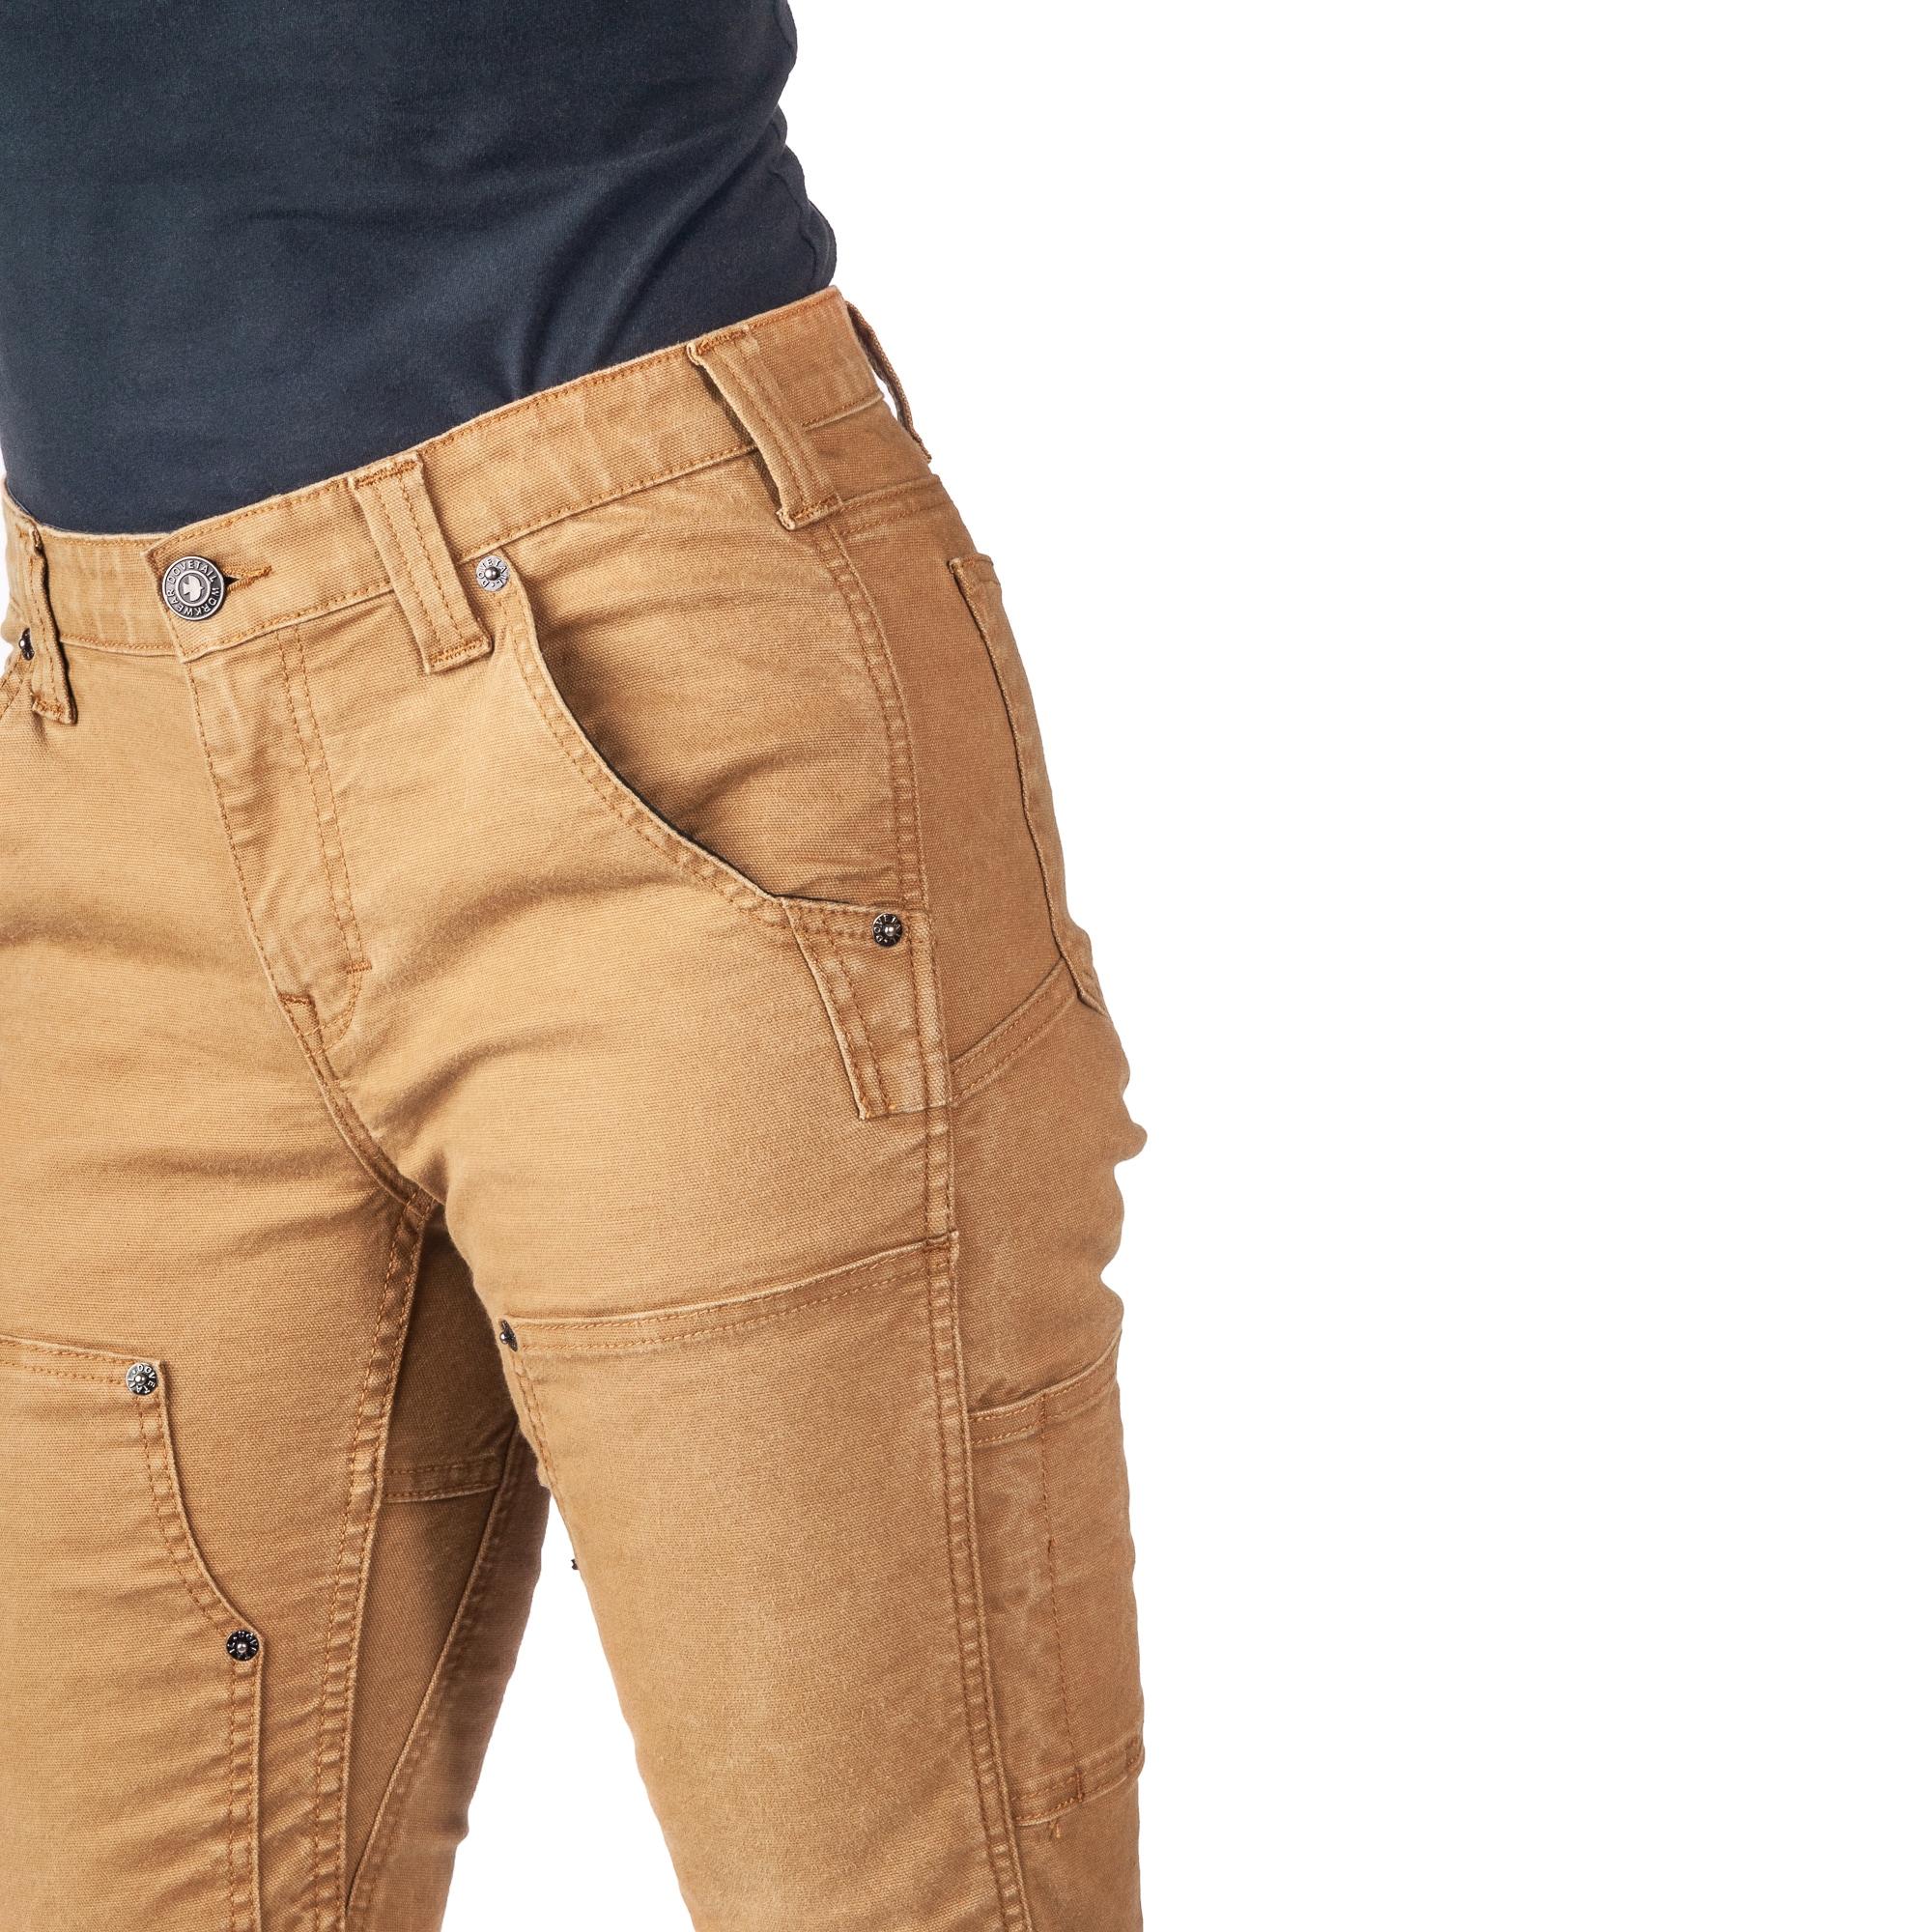 Dovetail Workwear Women's Saddle Brown Canvas Work Pants (18 X 32